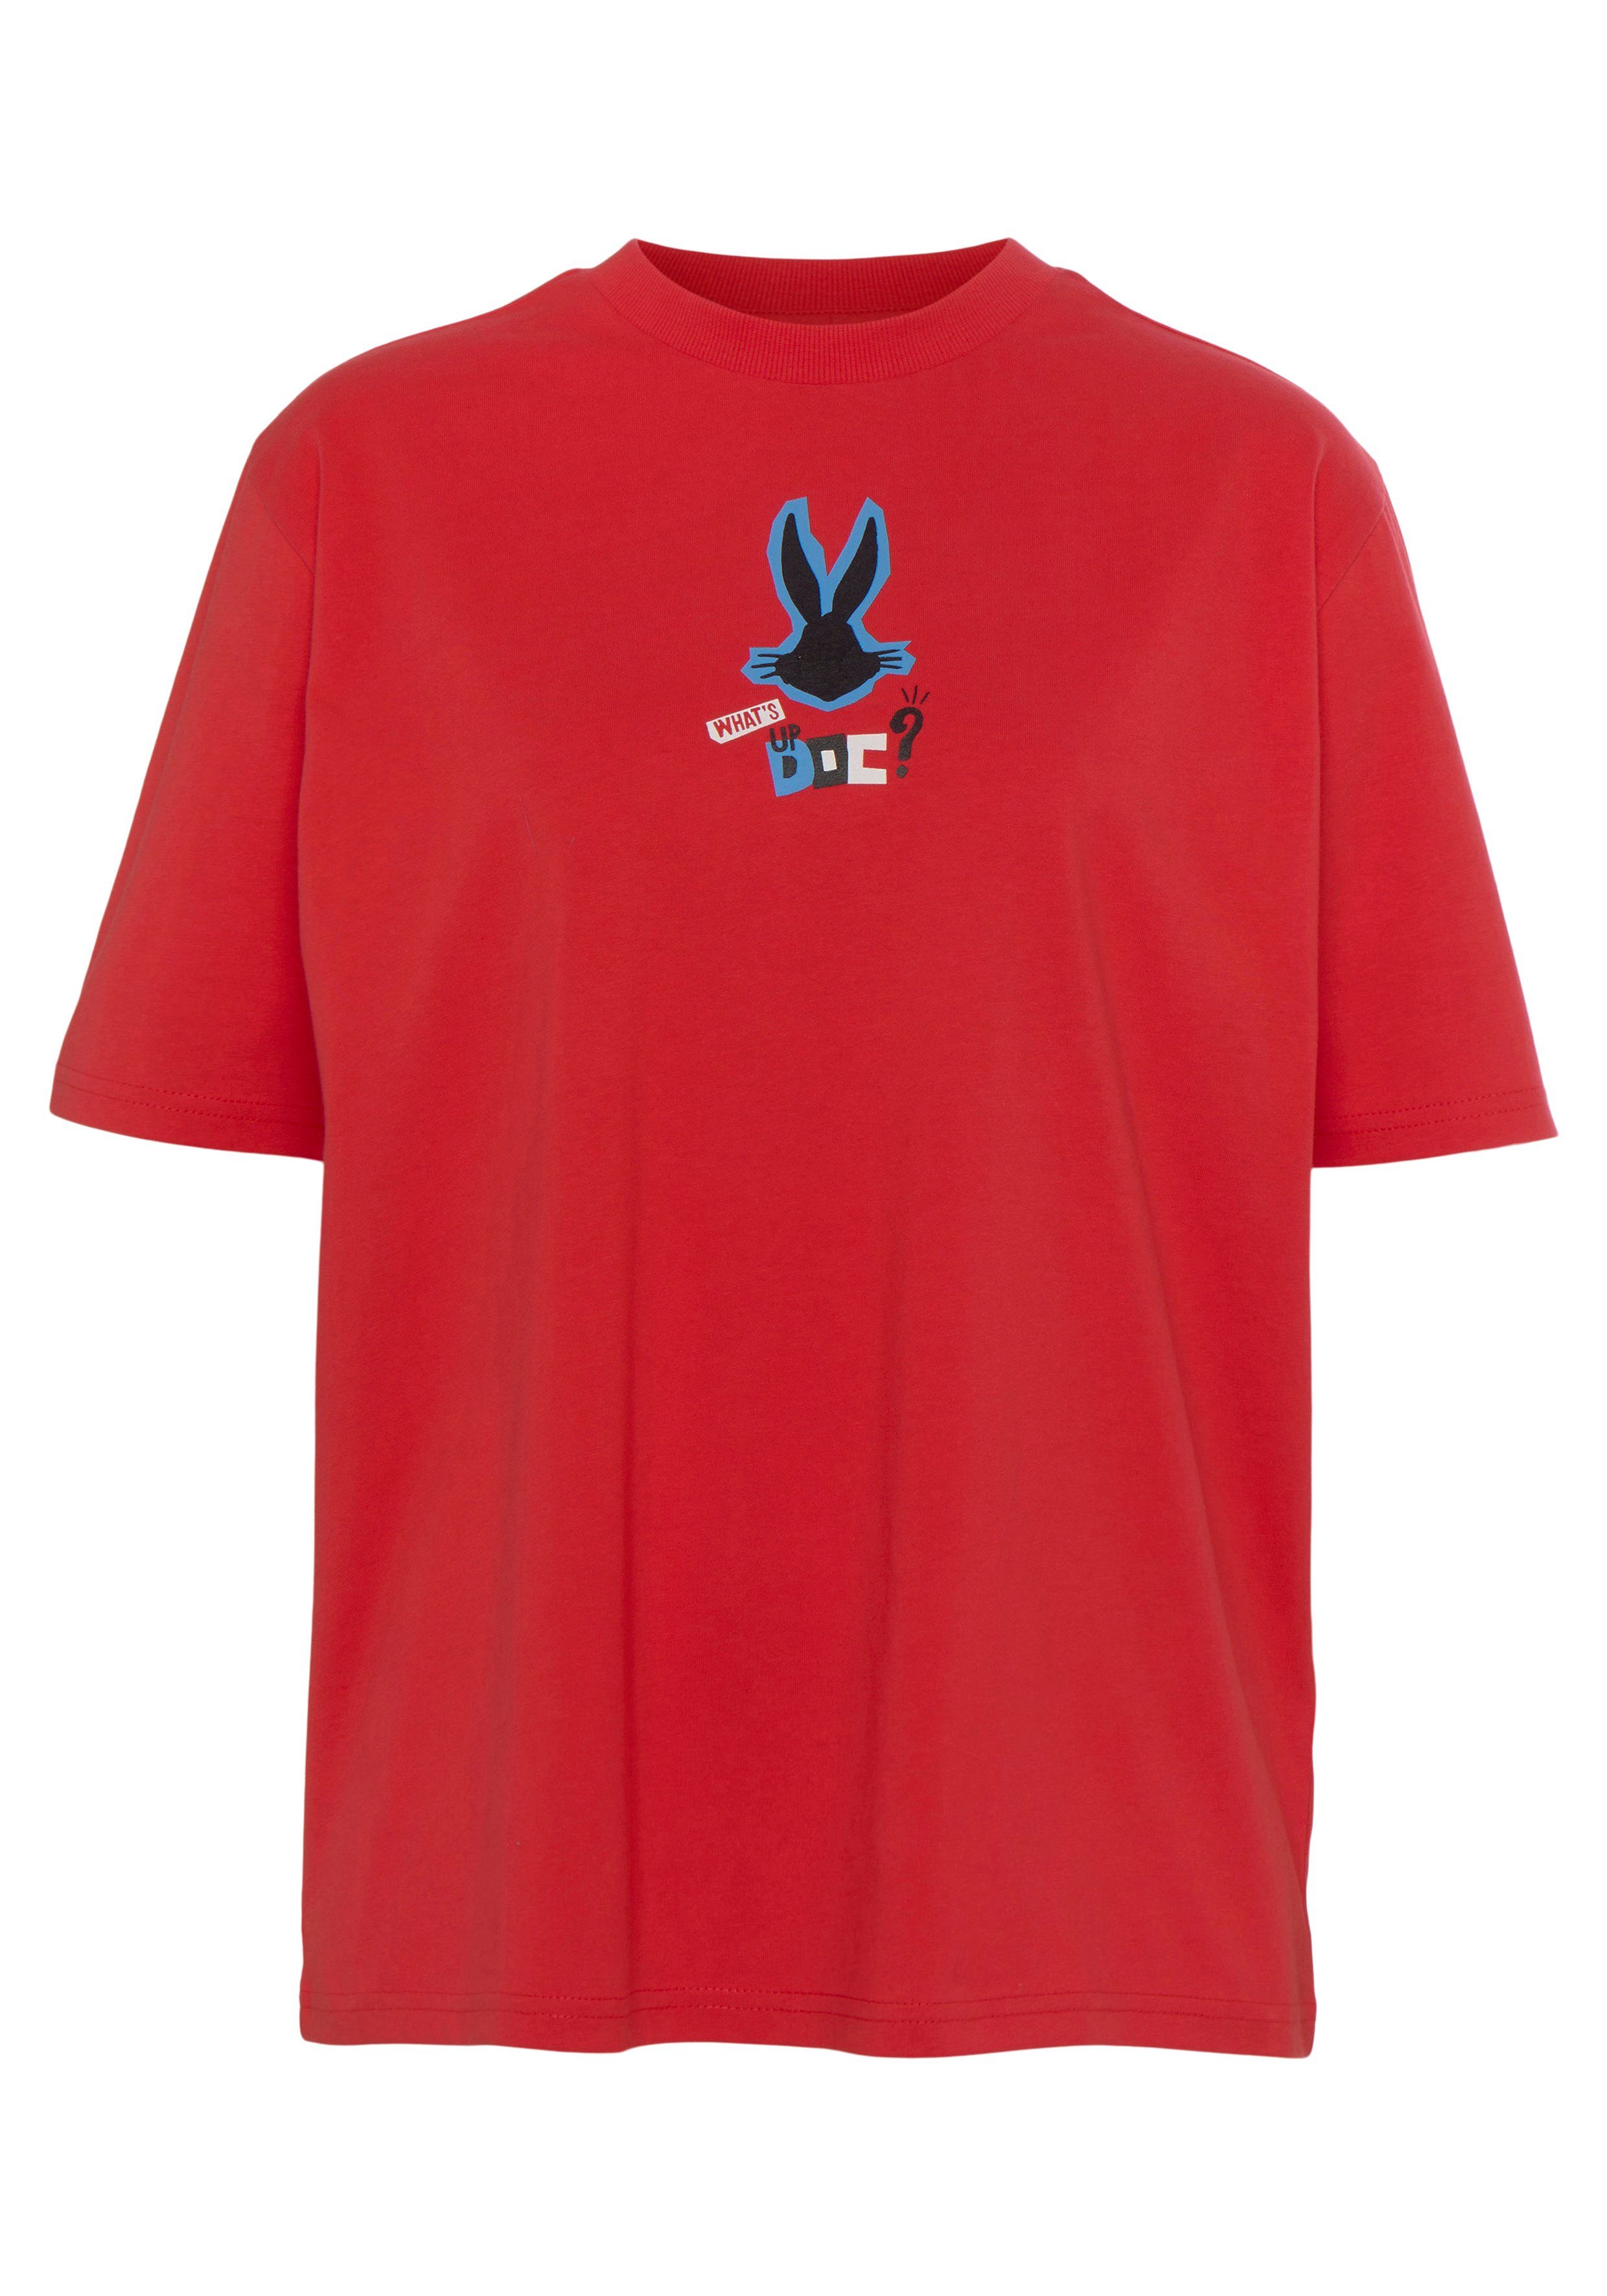 Capelli New York T-Shirt mit Bunny Comic-Motiv mit Bugs Duck Duffy